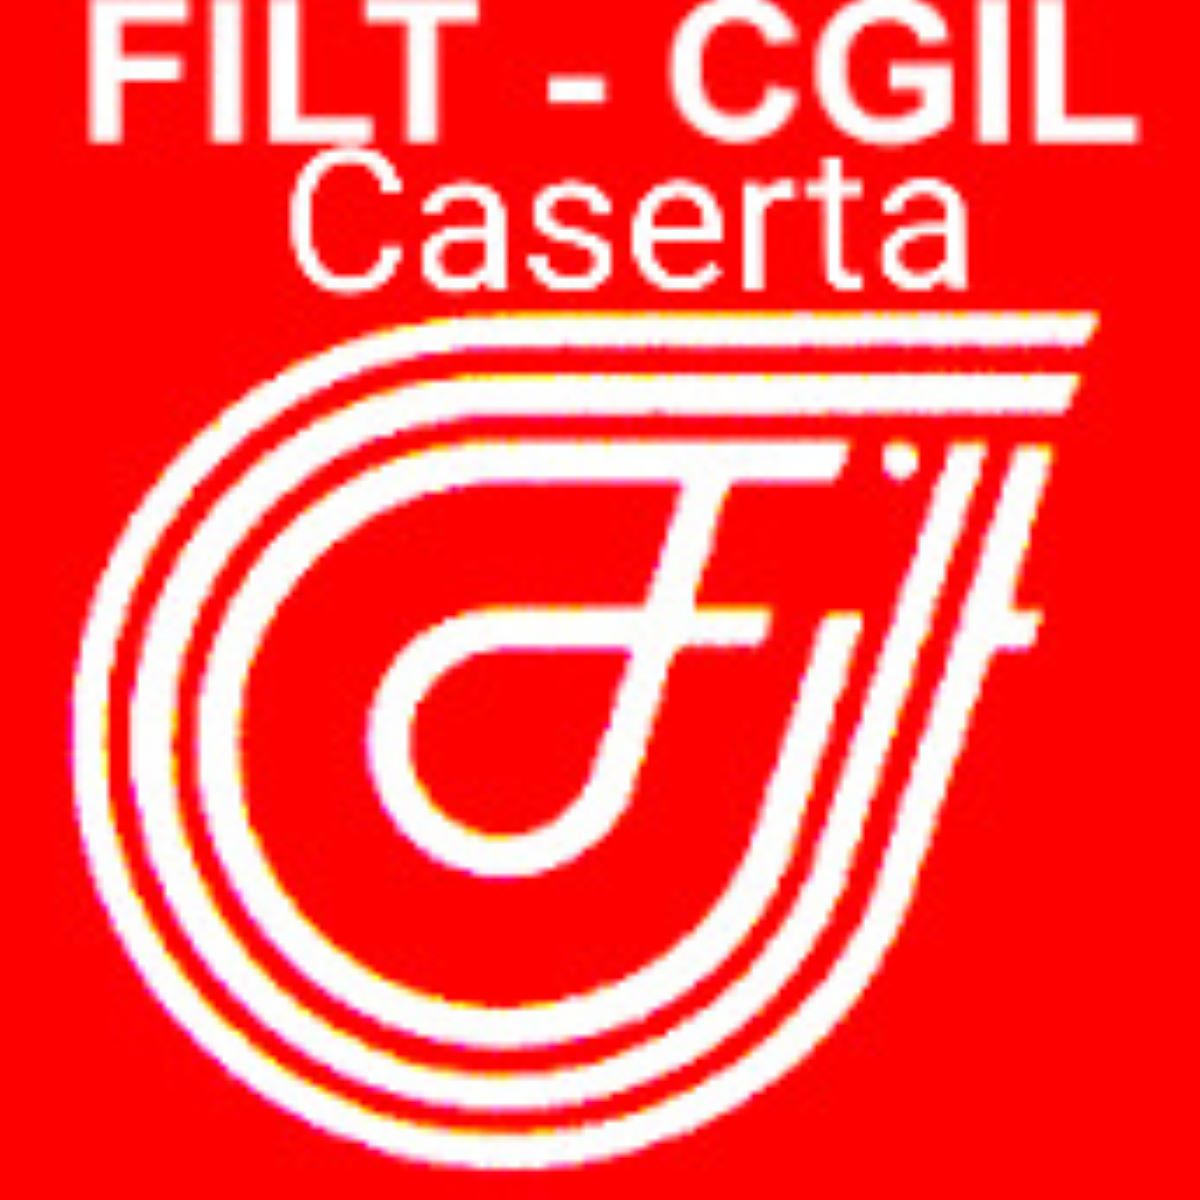 caserta-filt-cgil